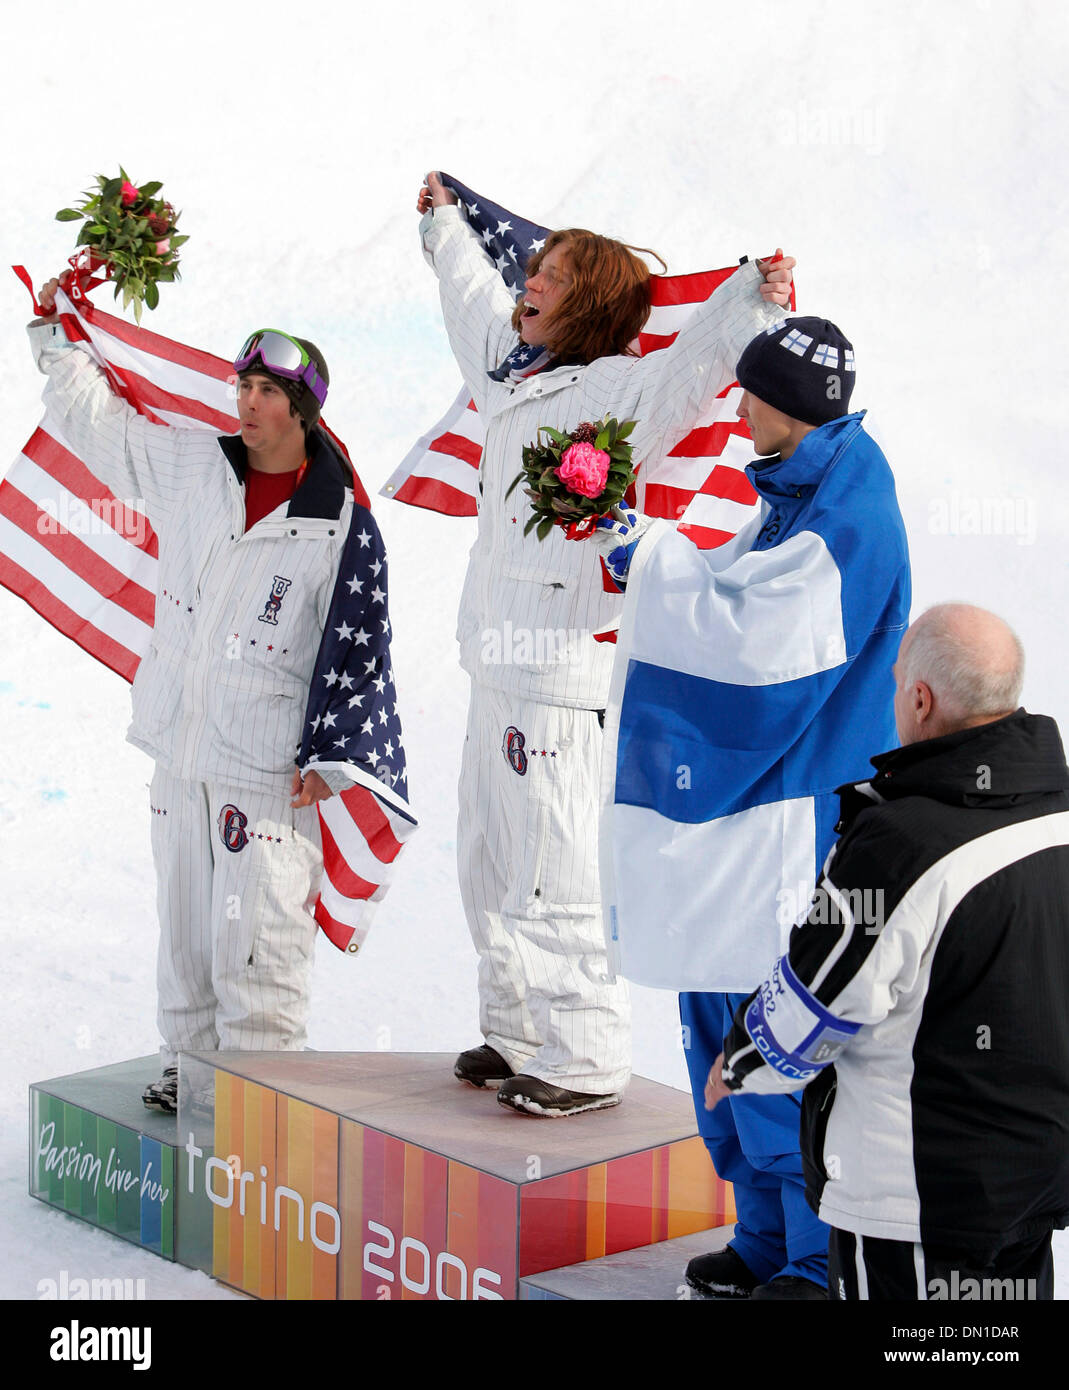 Torino 2006: Shaun White wins gold in snowboard halfpipe